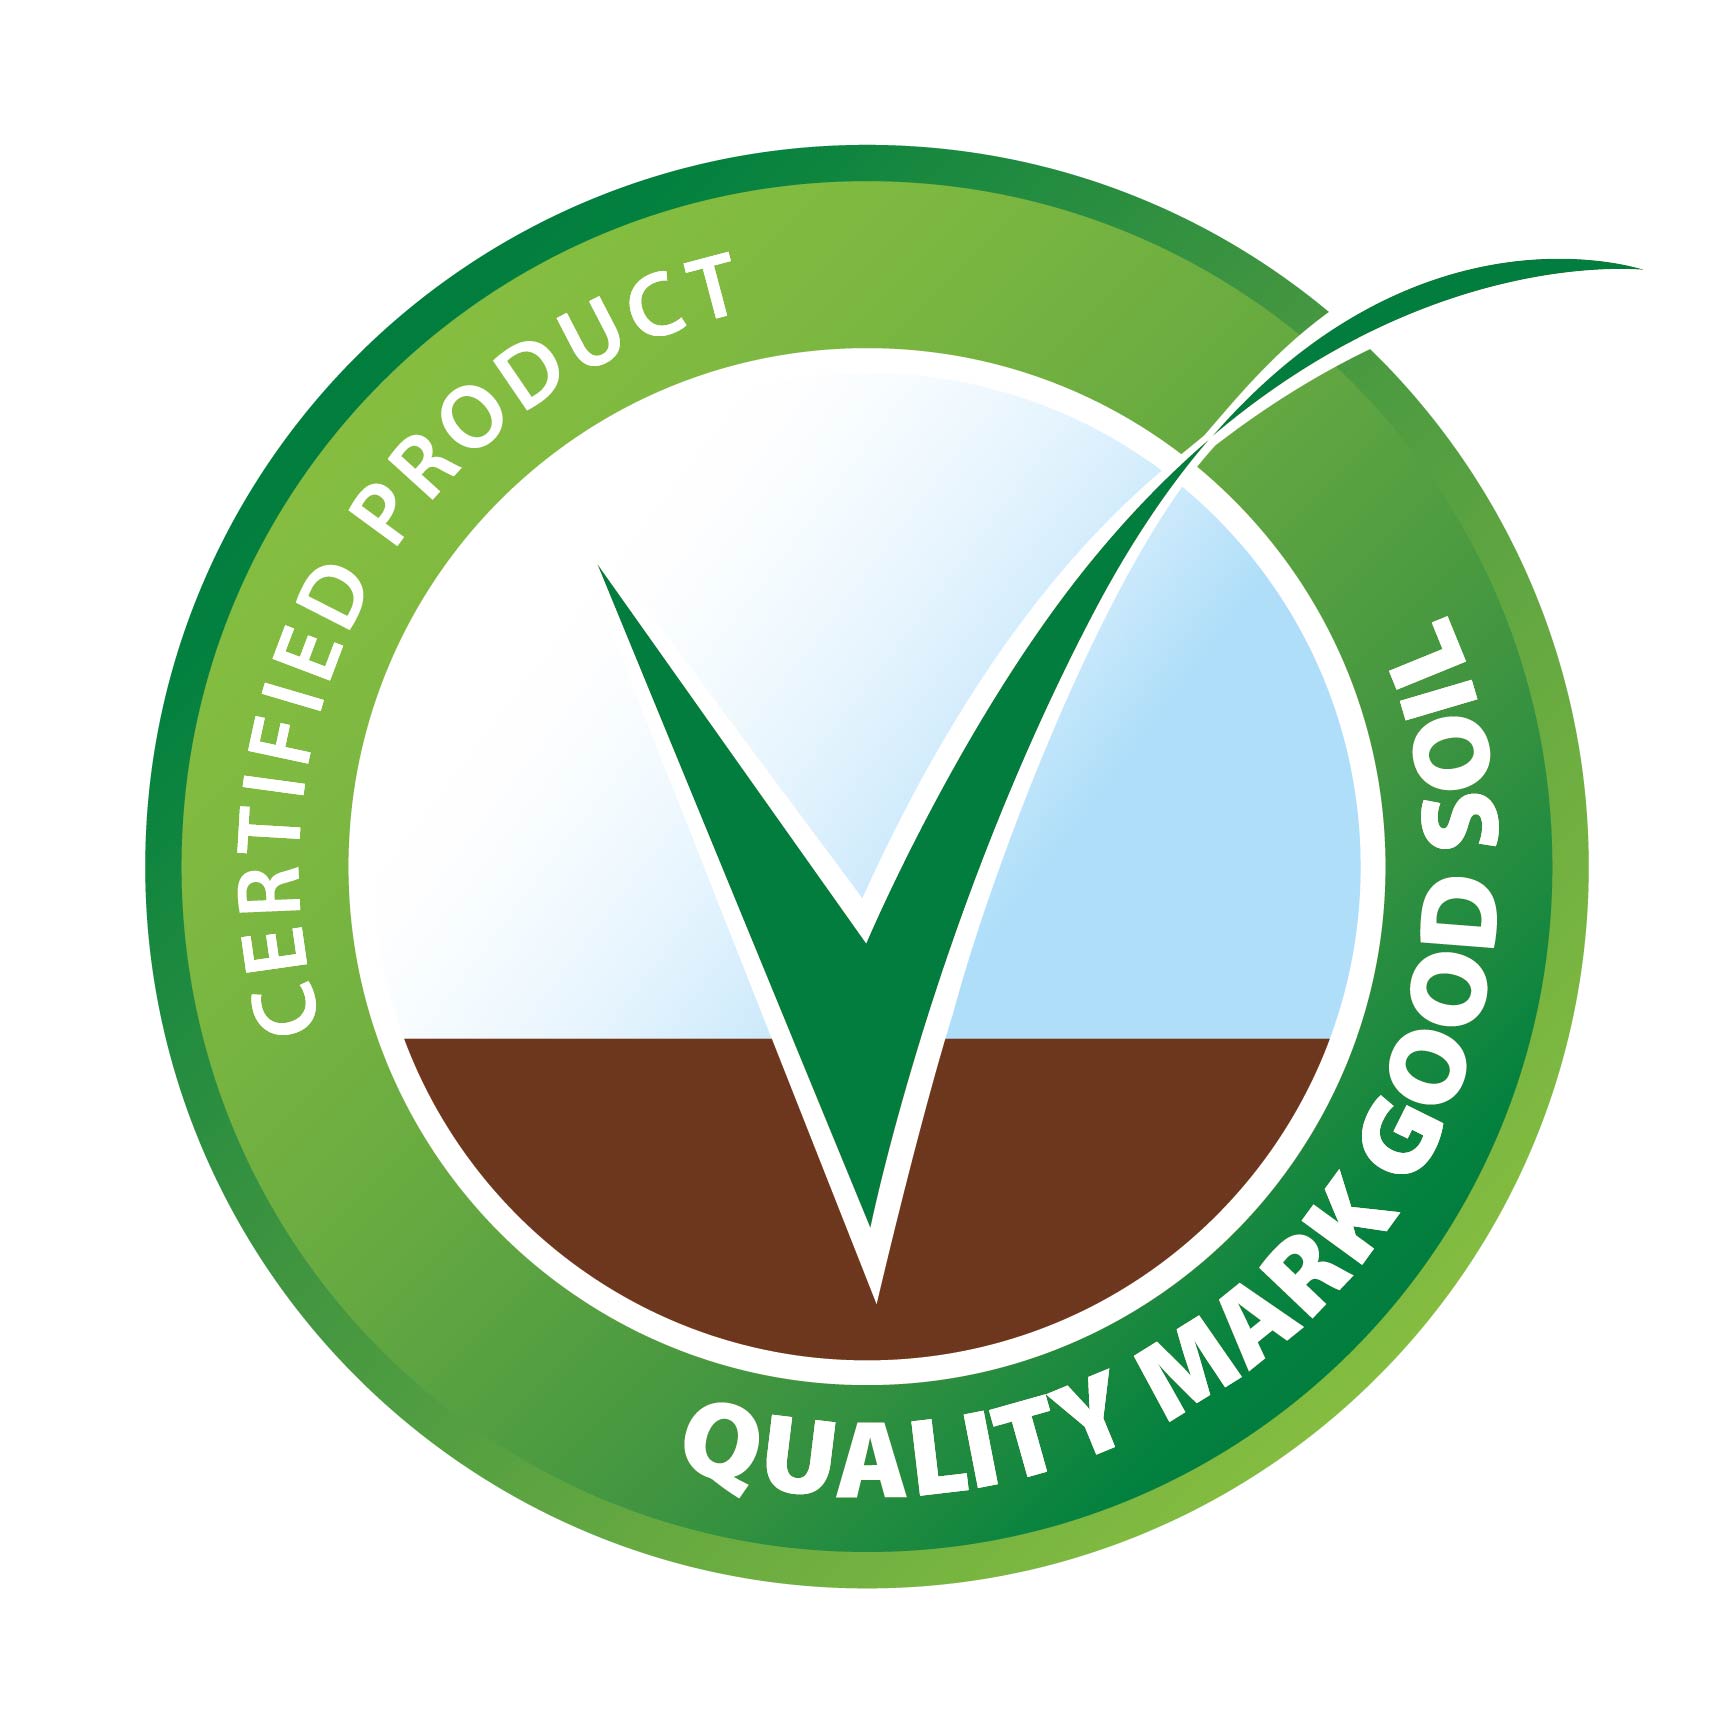 QMGS_quality_mark_good_soil